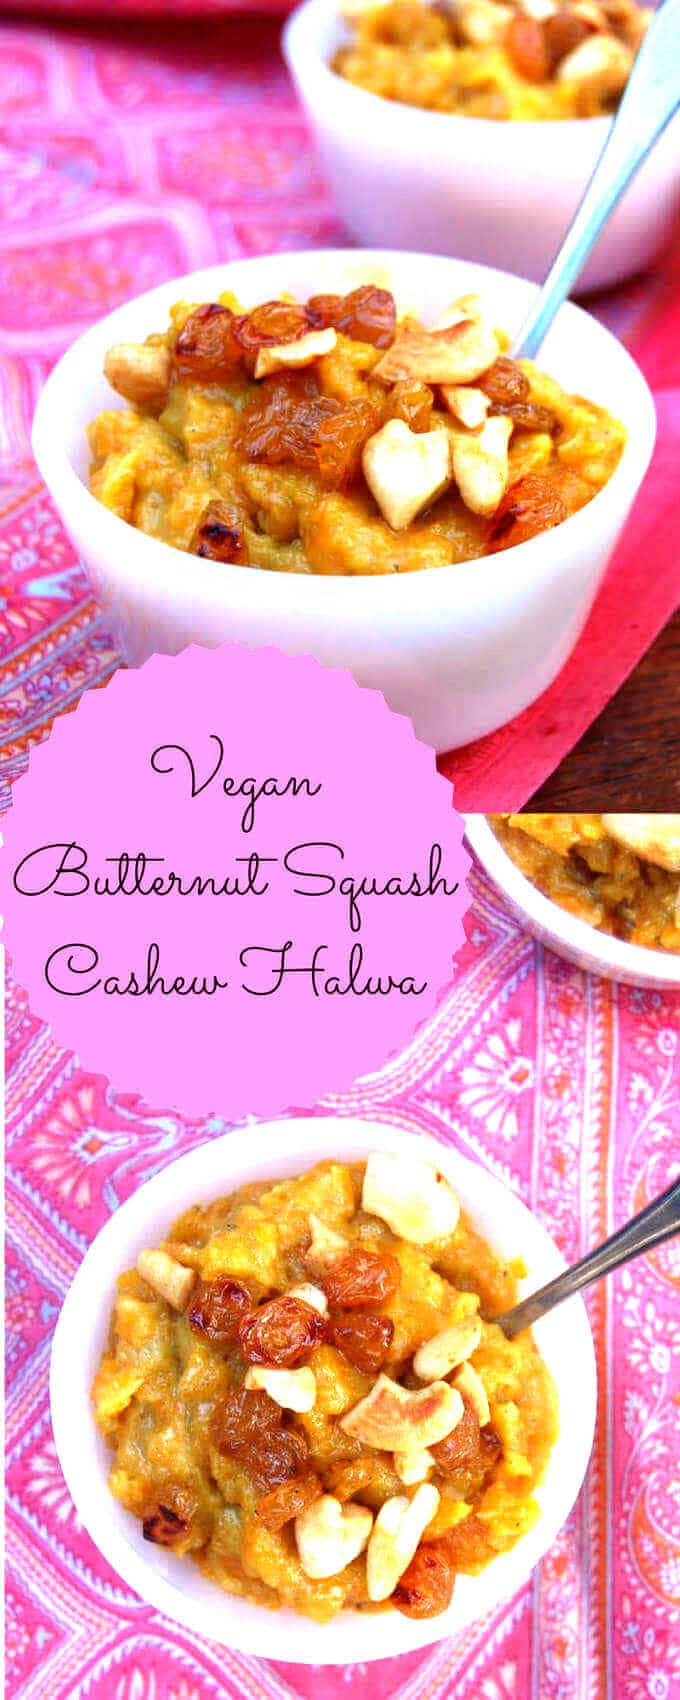 images of vegan halwa with text inlay that says "vegan butternut squash cashew halwa"